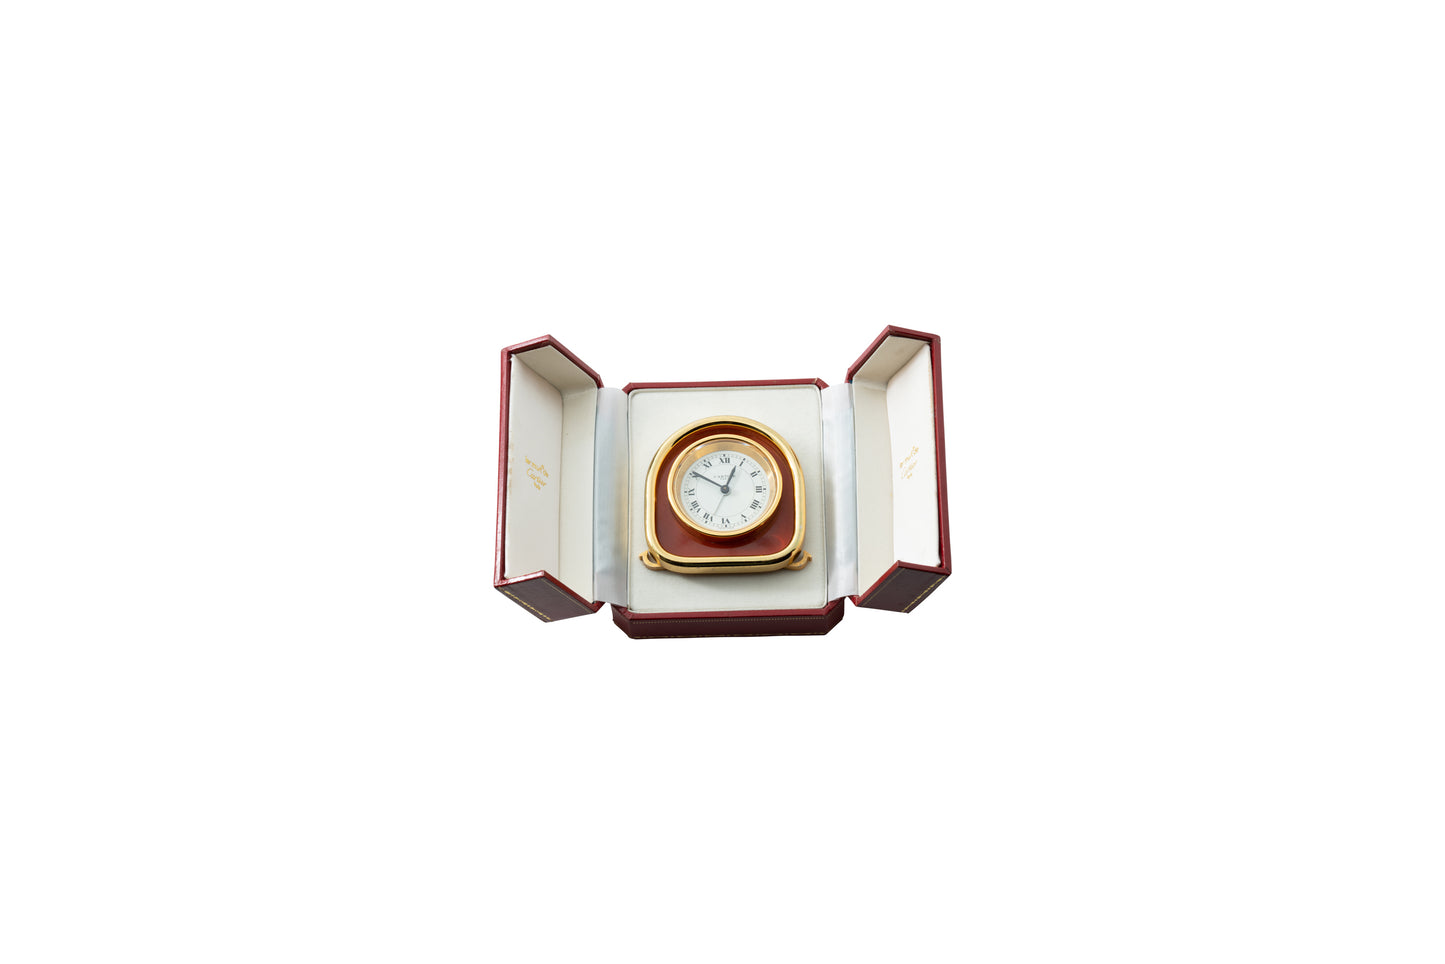 Cartier Must De Cartier Travel Alarm Clock